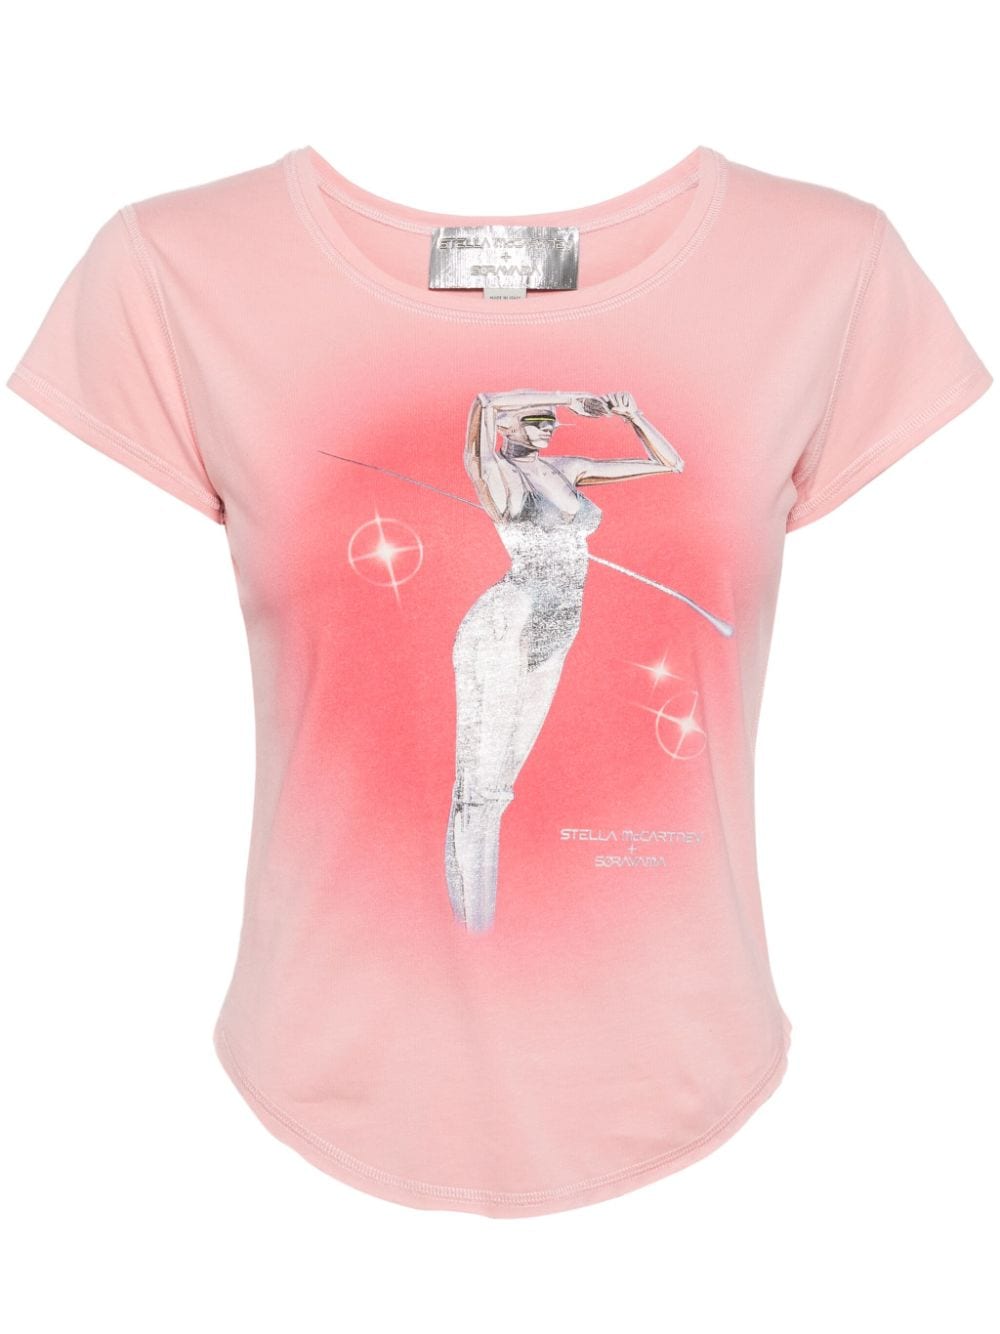 Stella McCartney x Sorayama Sexy Robot cotton T-shirt - Pink von Stella McCartney